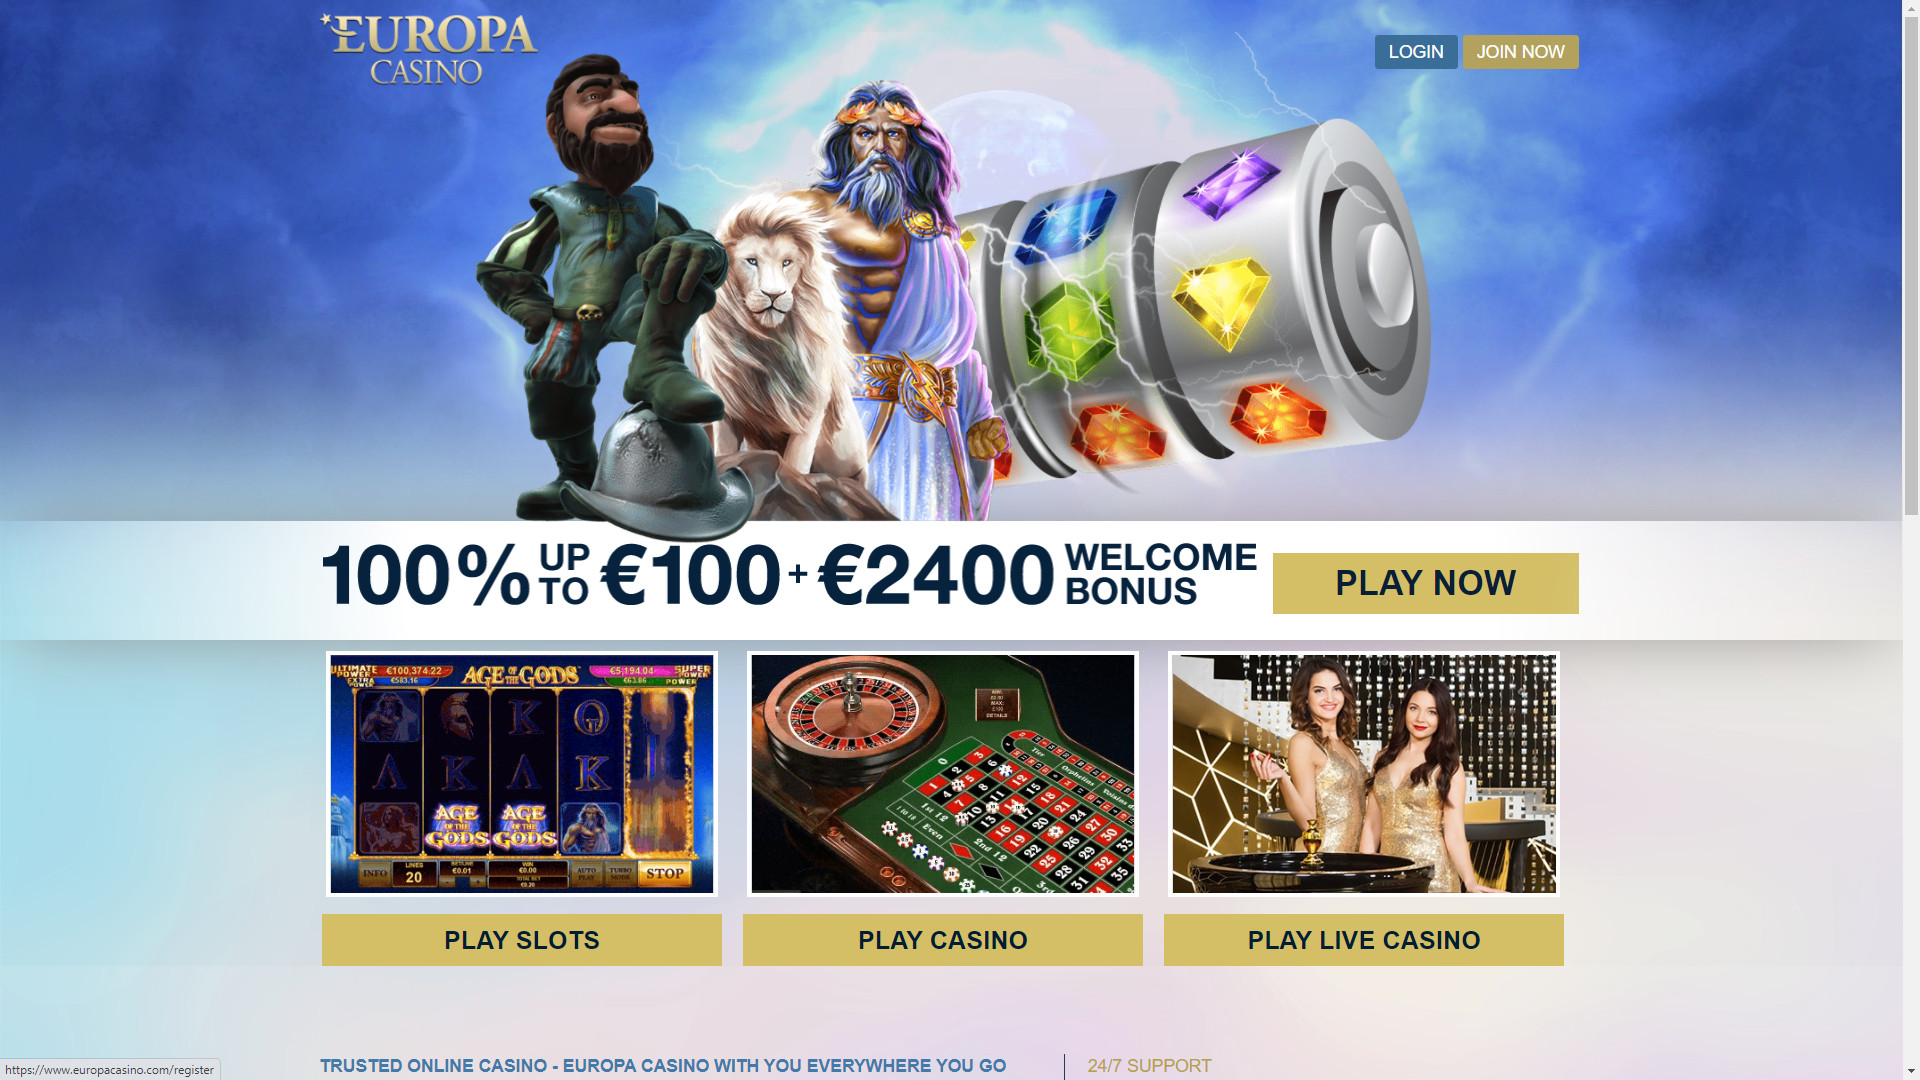 Europa casino's main page